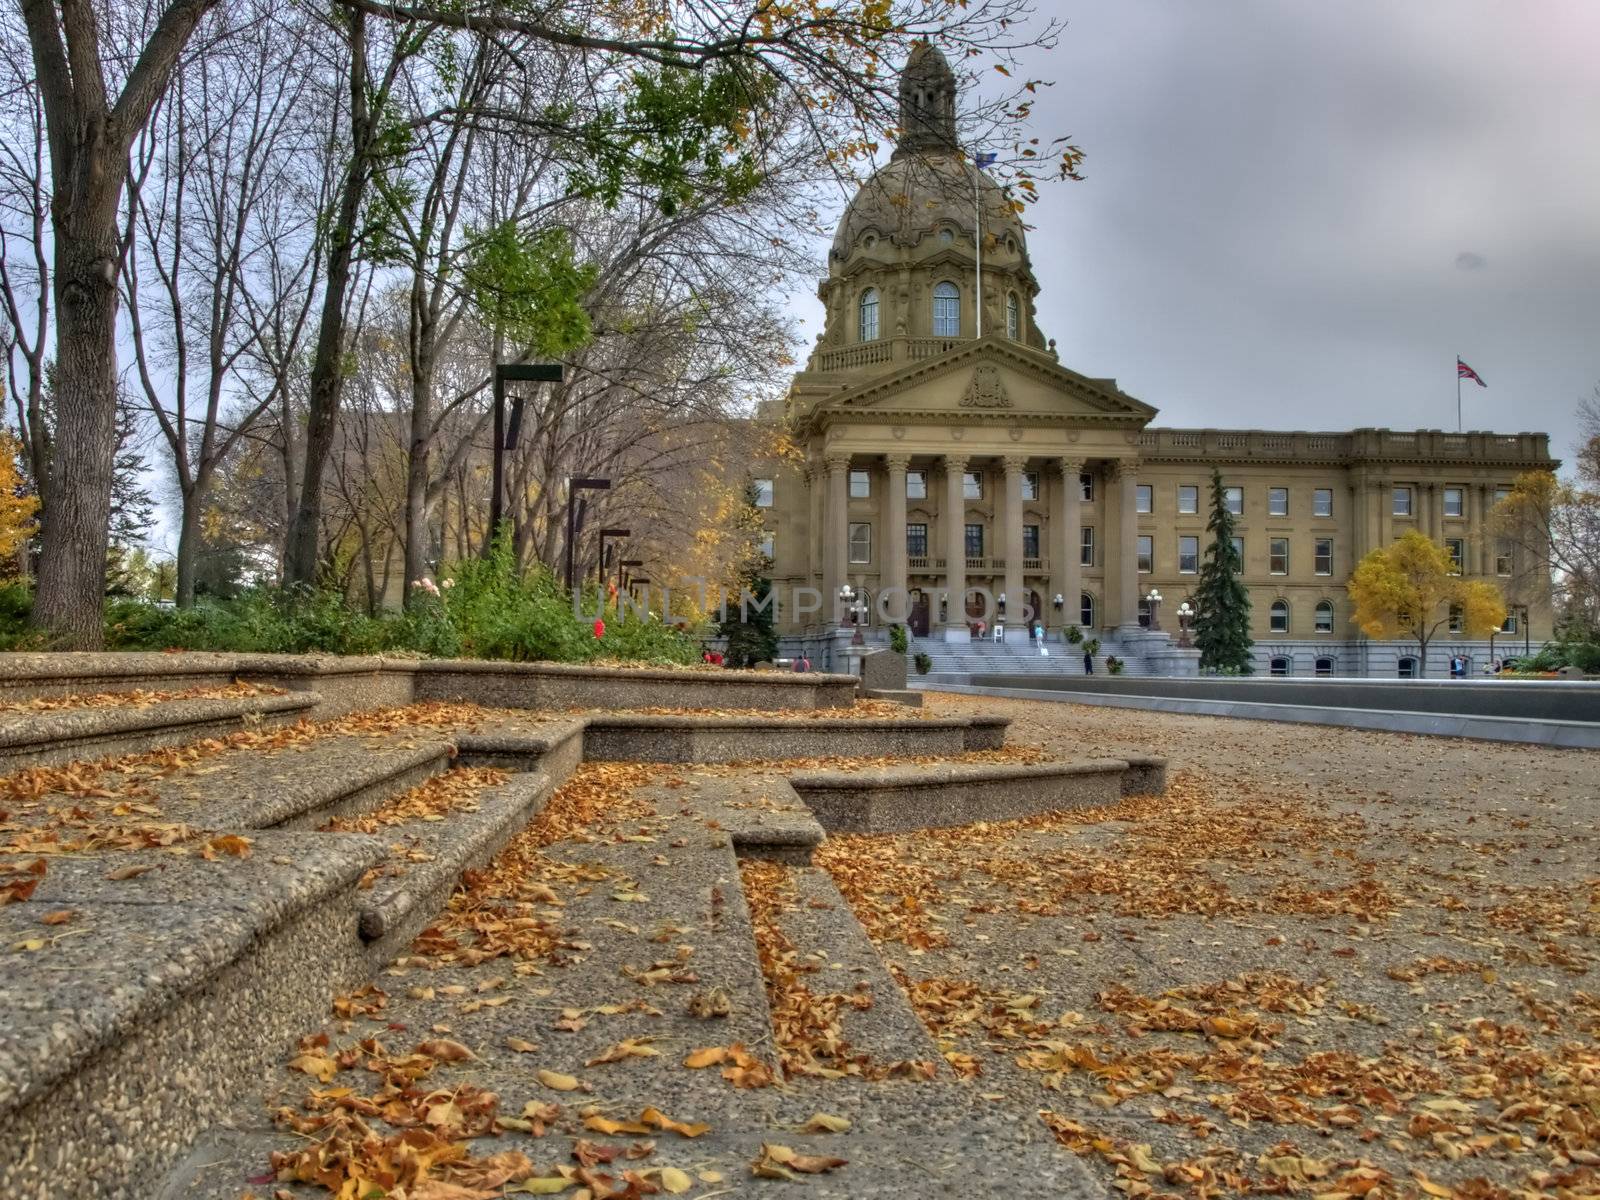 Legislature building and grounds in Edmonton, Alberta, Canada.